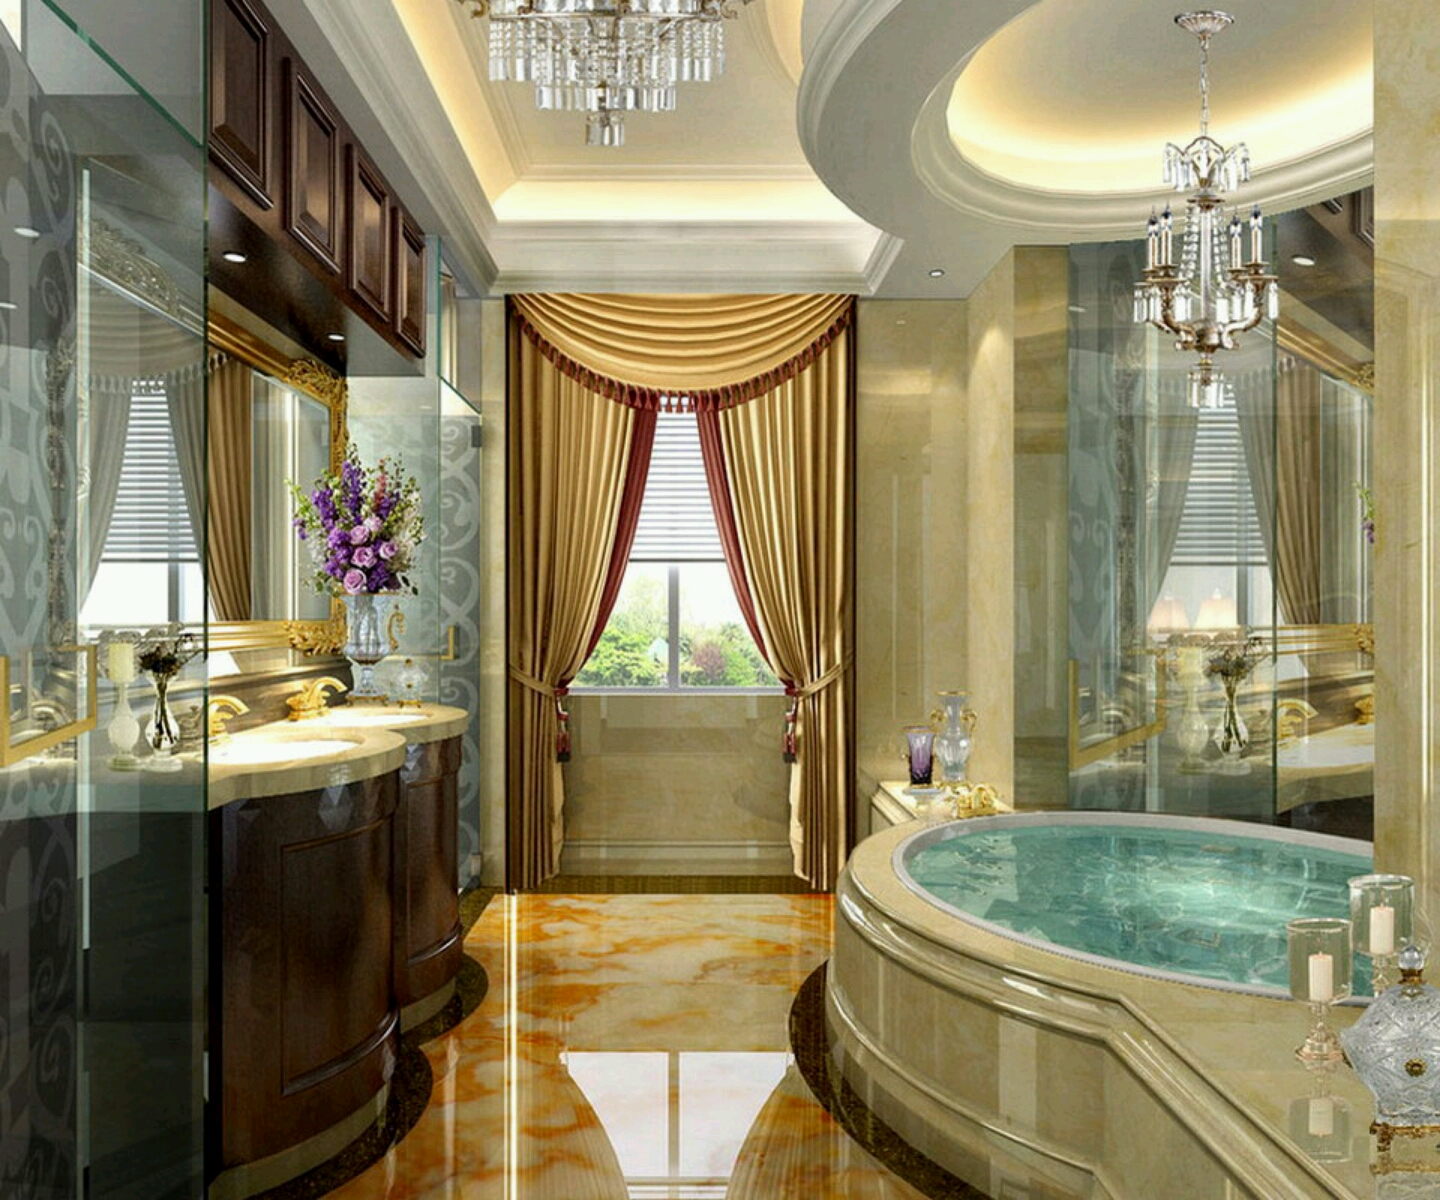 Luxury modern bathrooms designs decoration ideas. | New home designs